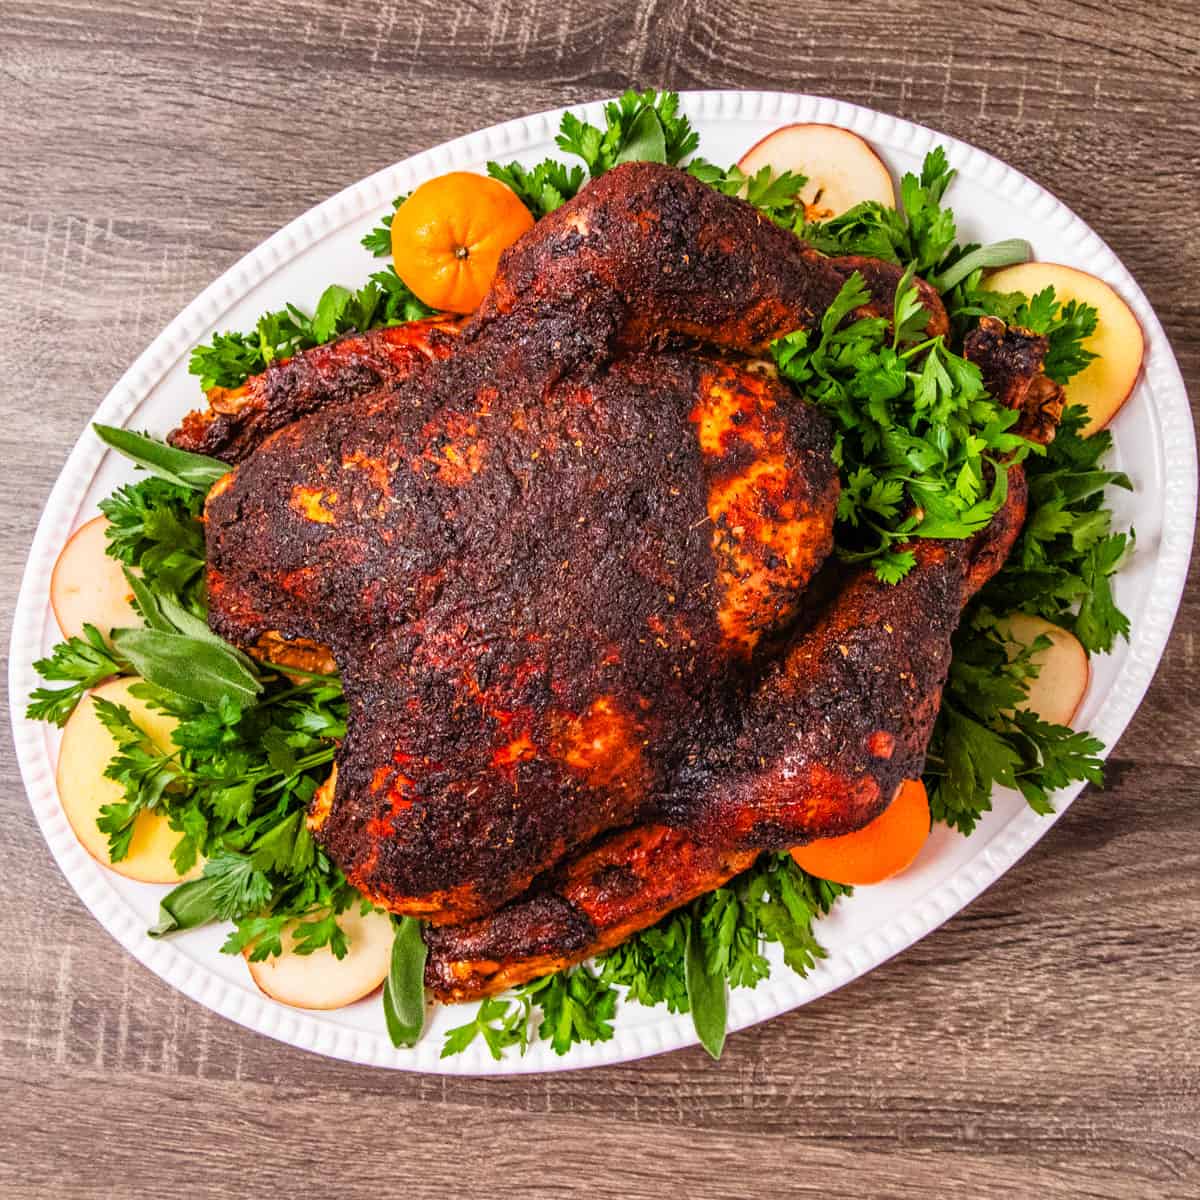 A roasted turkey seasoned with Creole seasoning served on a large platter.